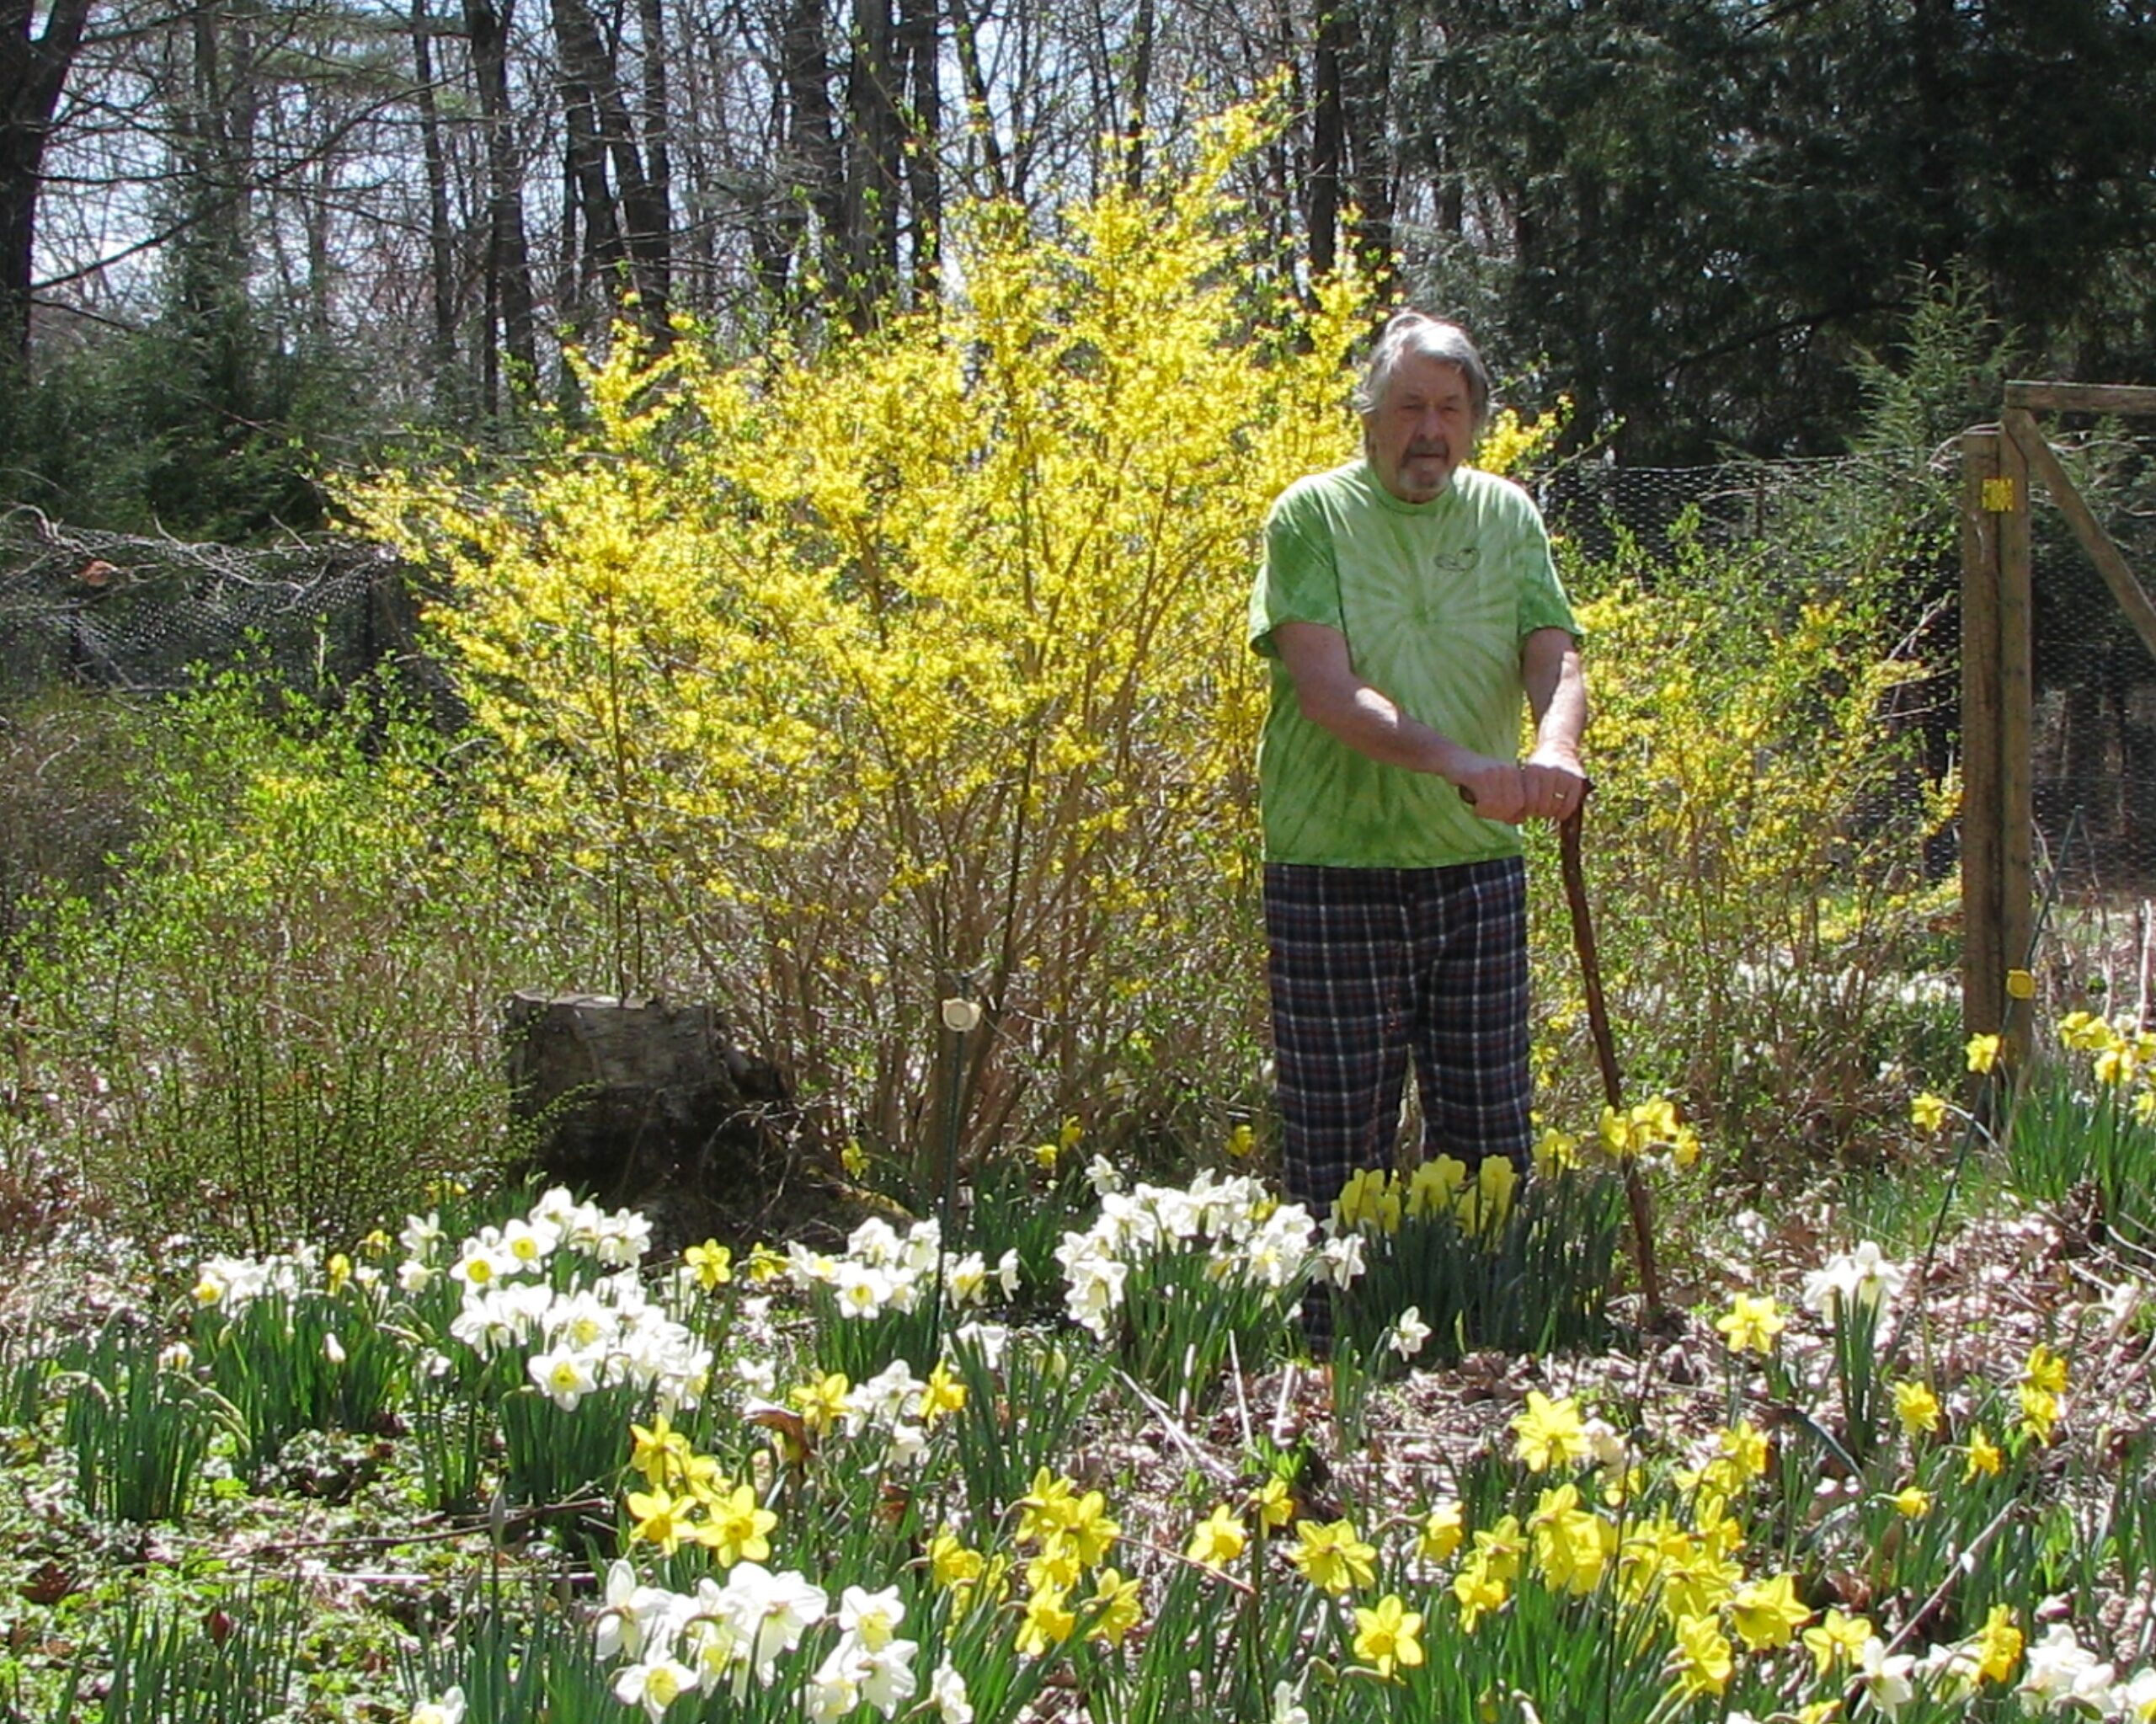 Man gardening among spring daffodils and forsythia.